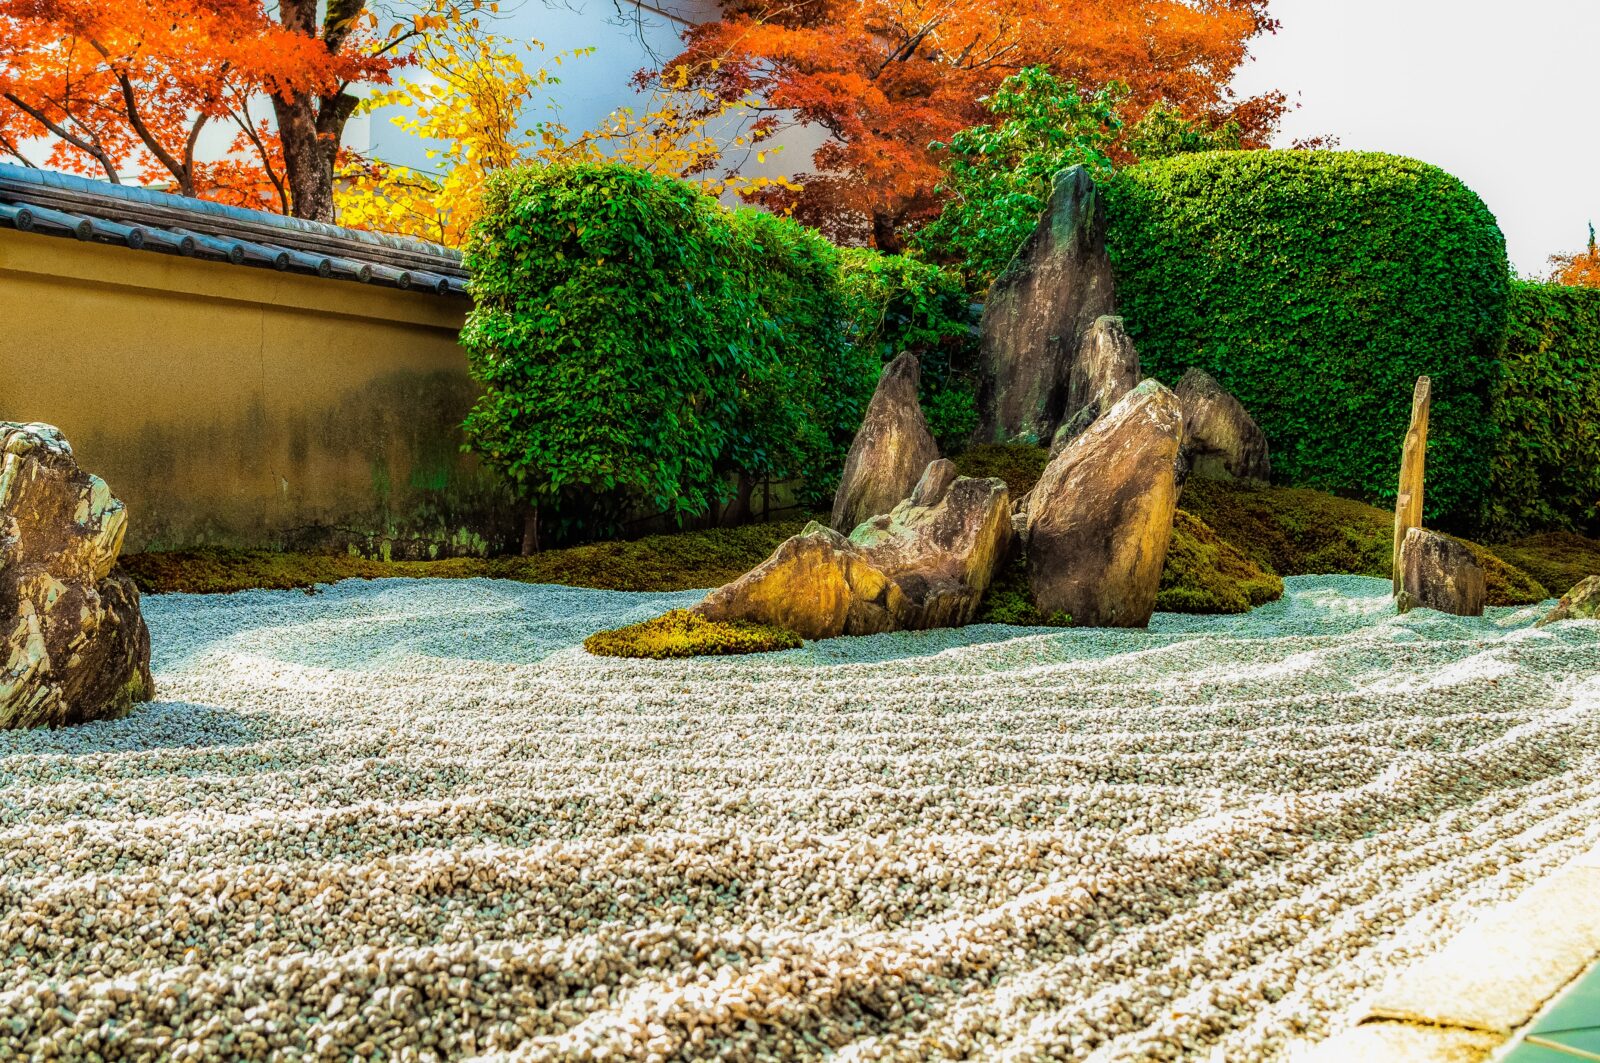 Touring My Favorite Zen Garden